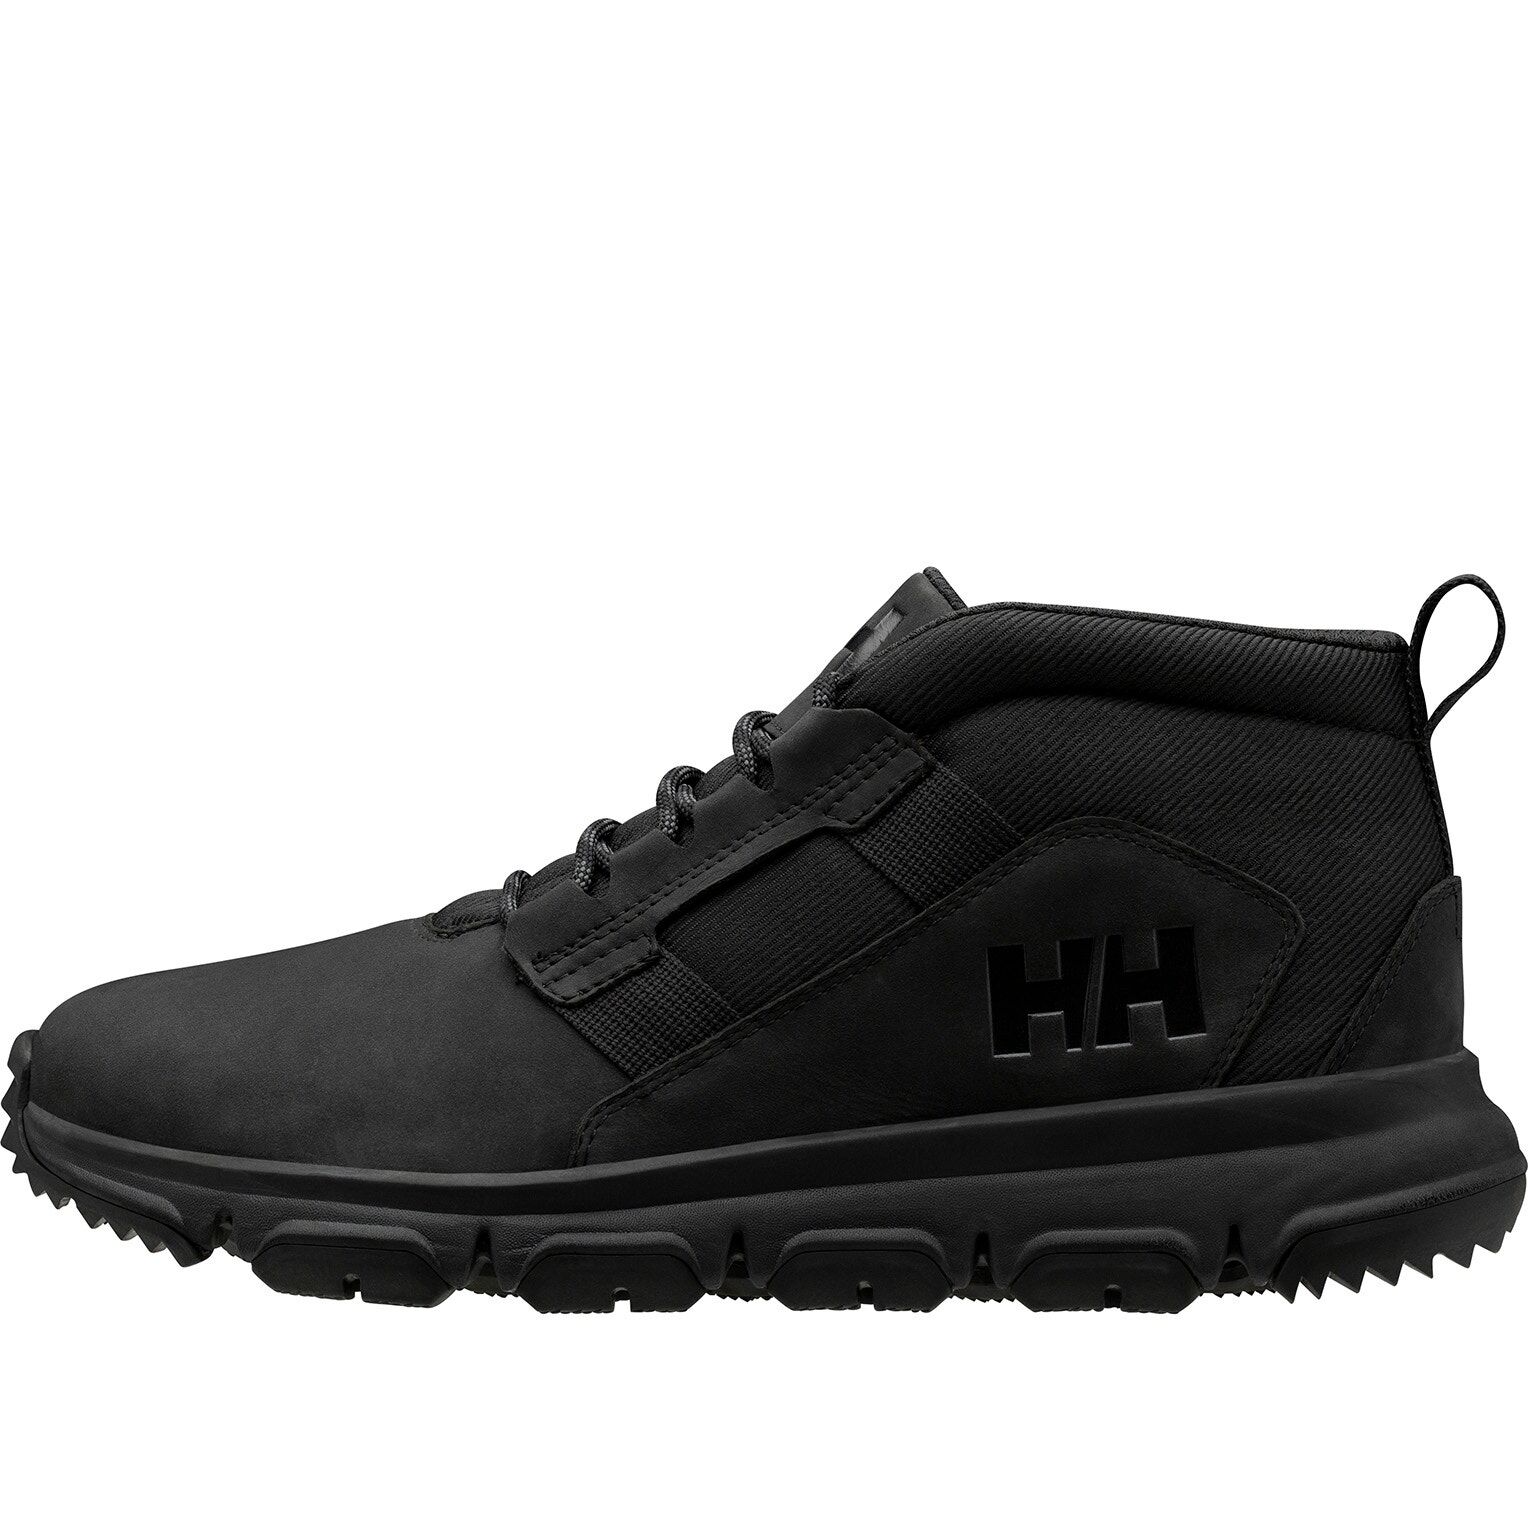 Helly Hansen Jaythen X2 - Boots - Men's